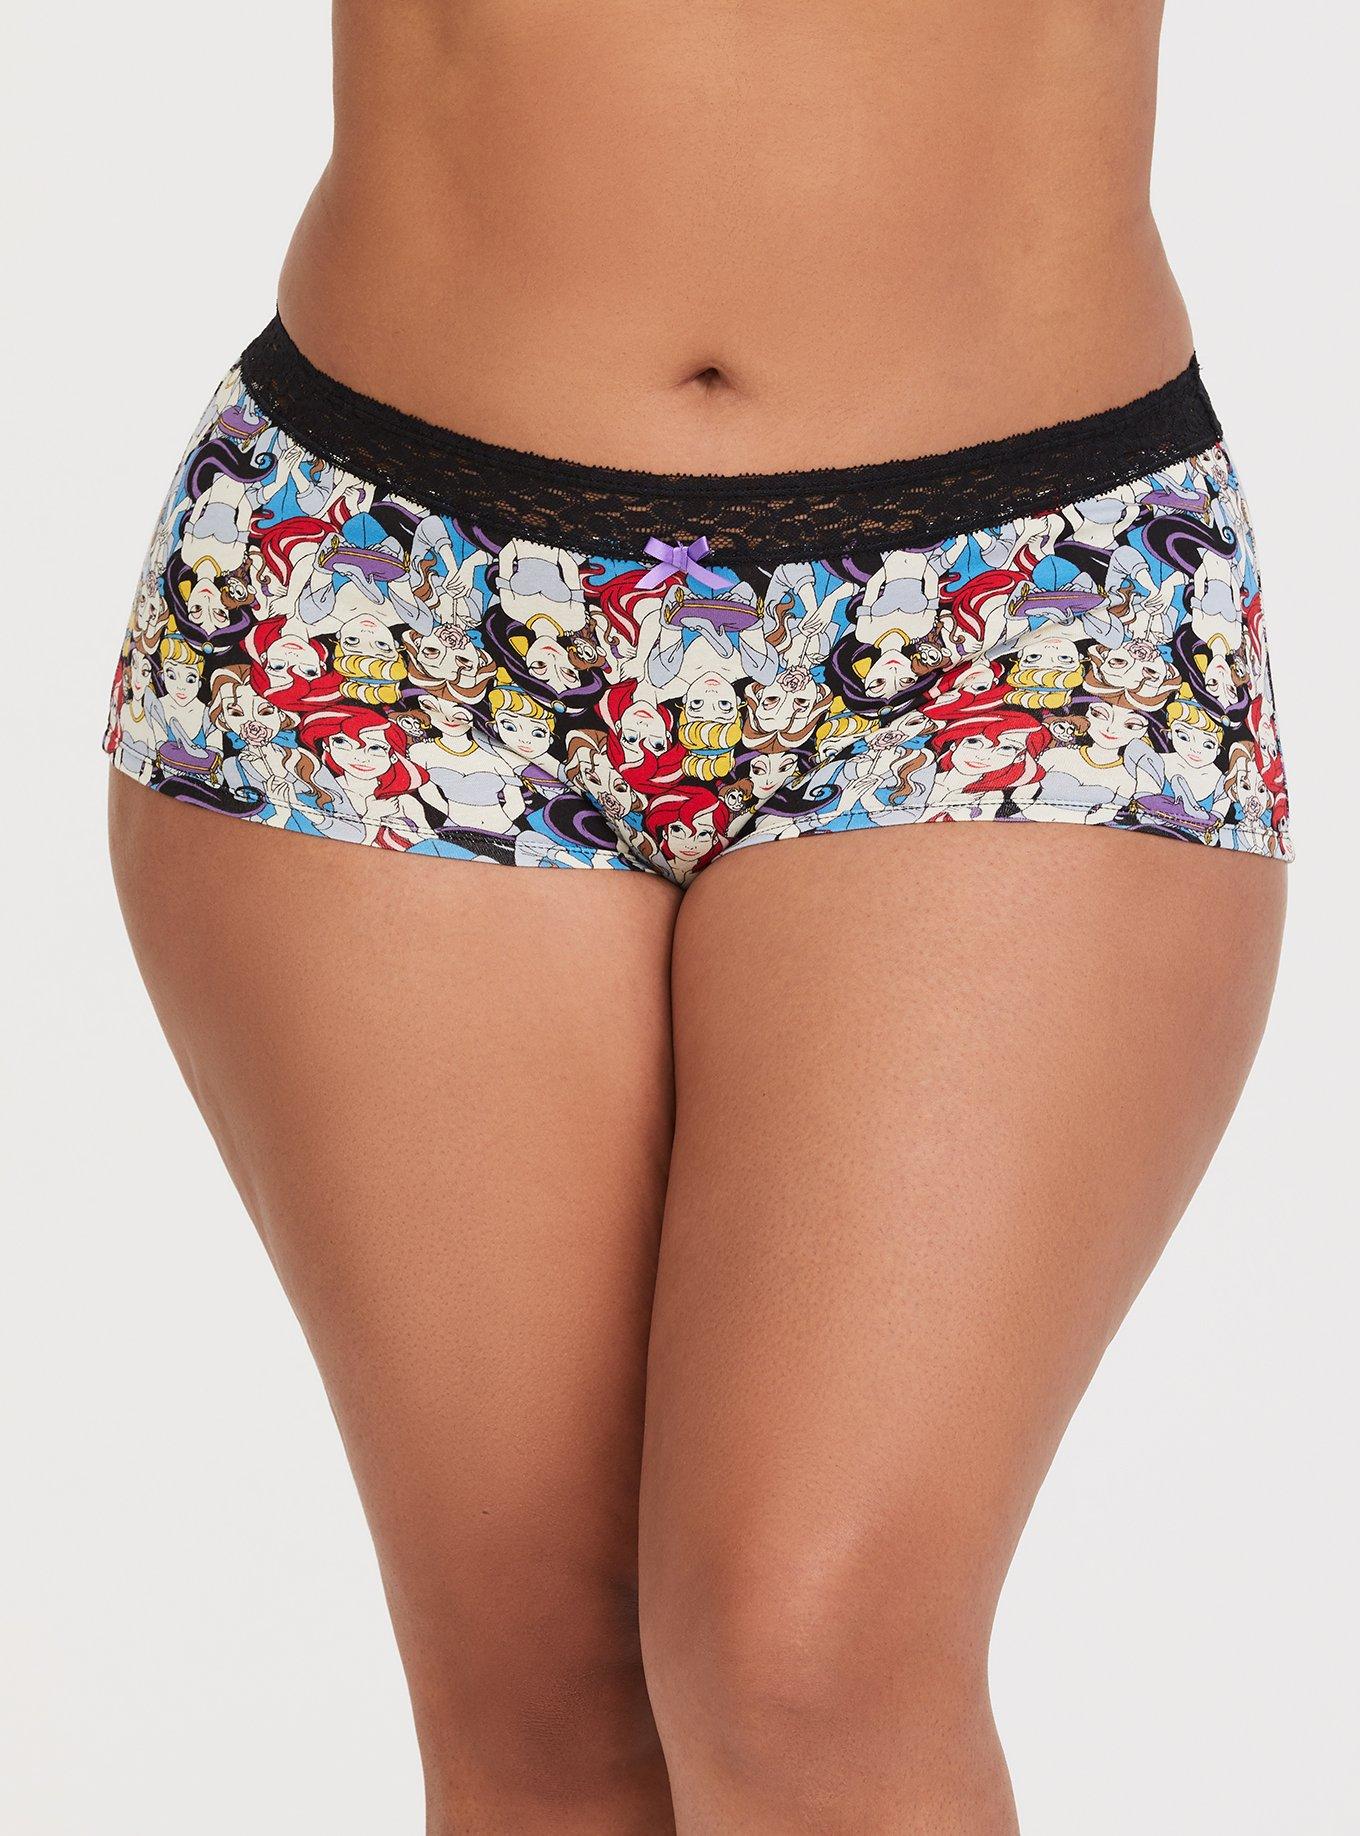 Official Disney Princess Women's Panties Boyshort Underwear!